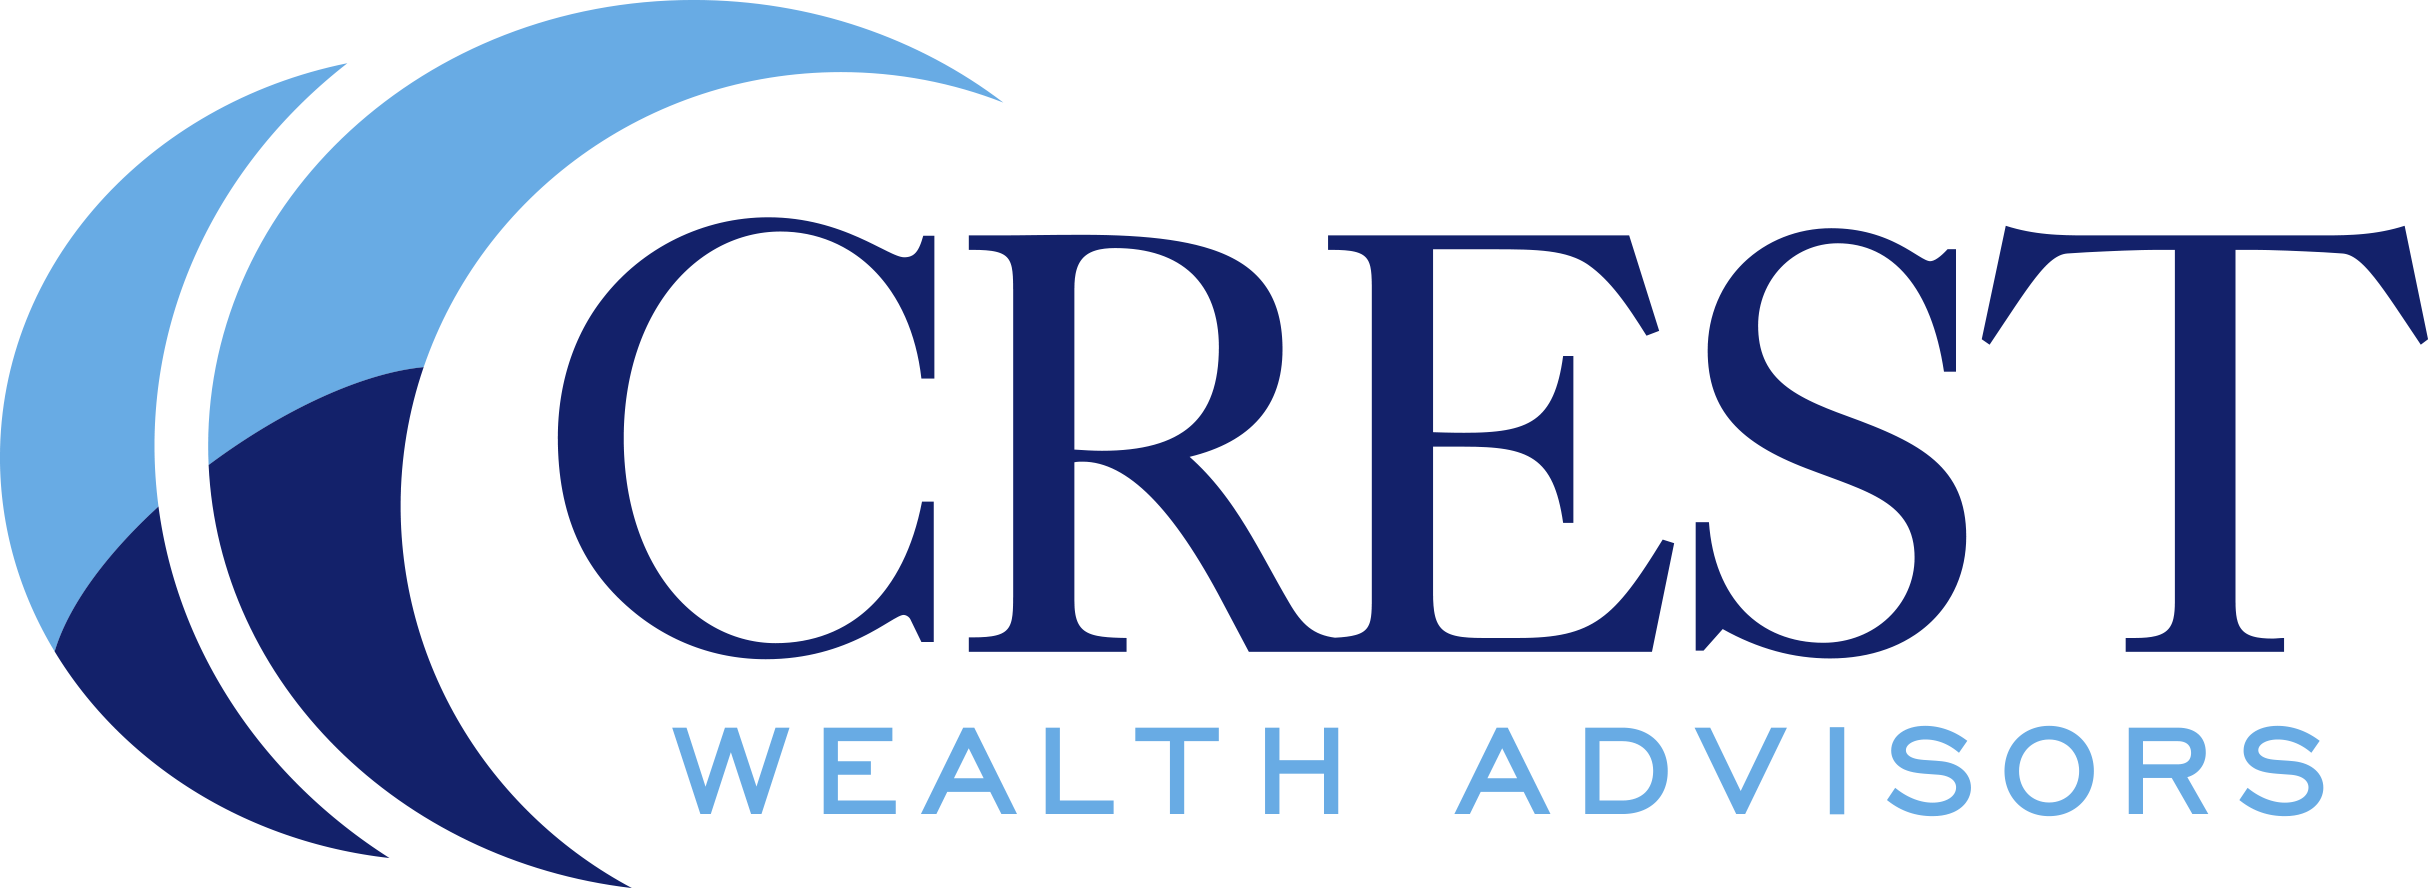 Crest wealth advisors logo (live water luau sponsor)